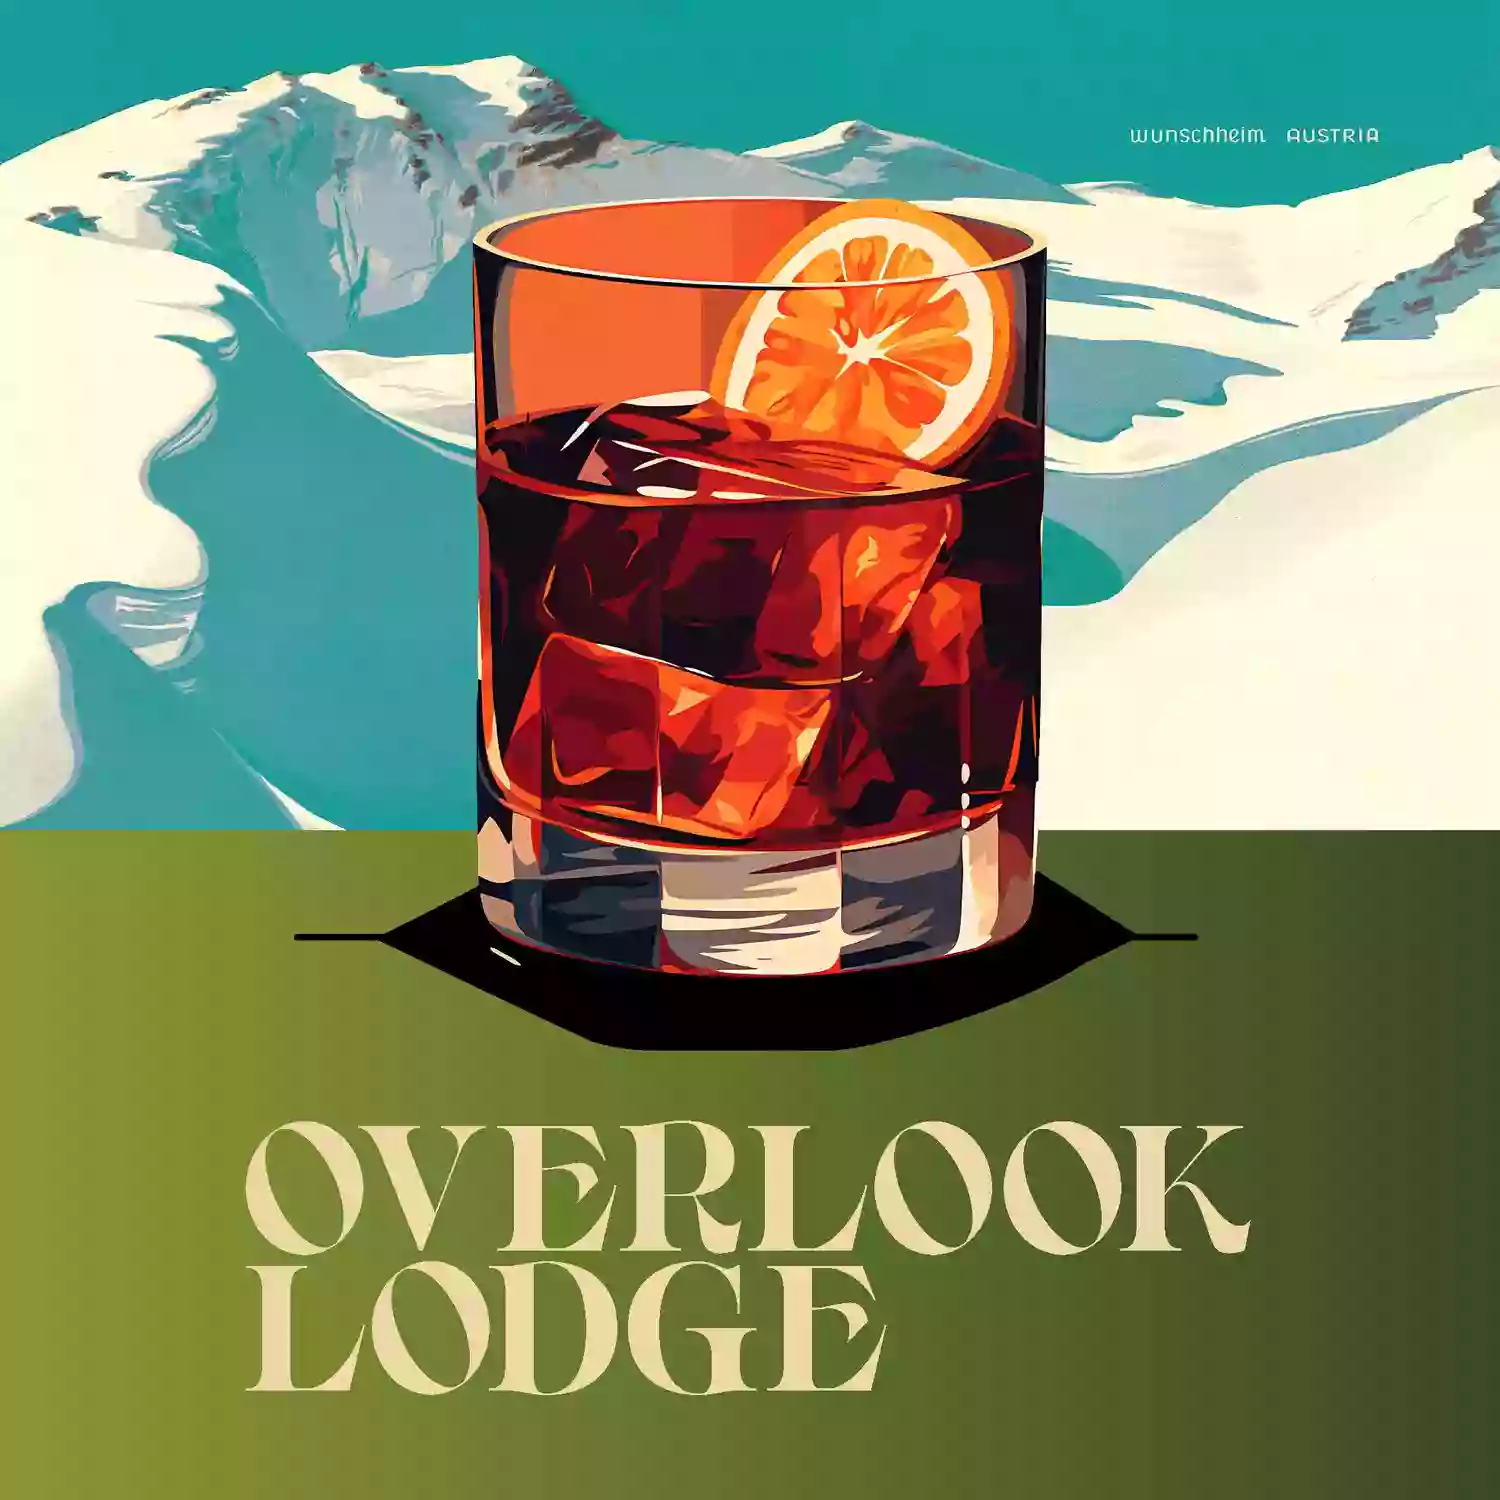 The Overlook Lodge